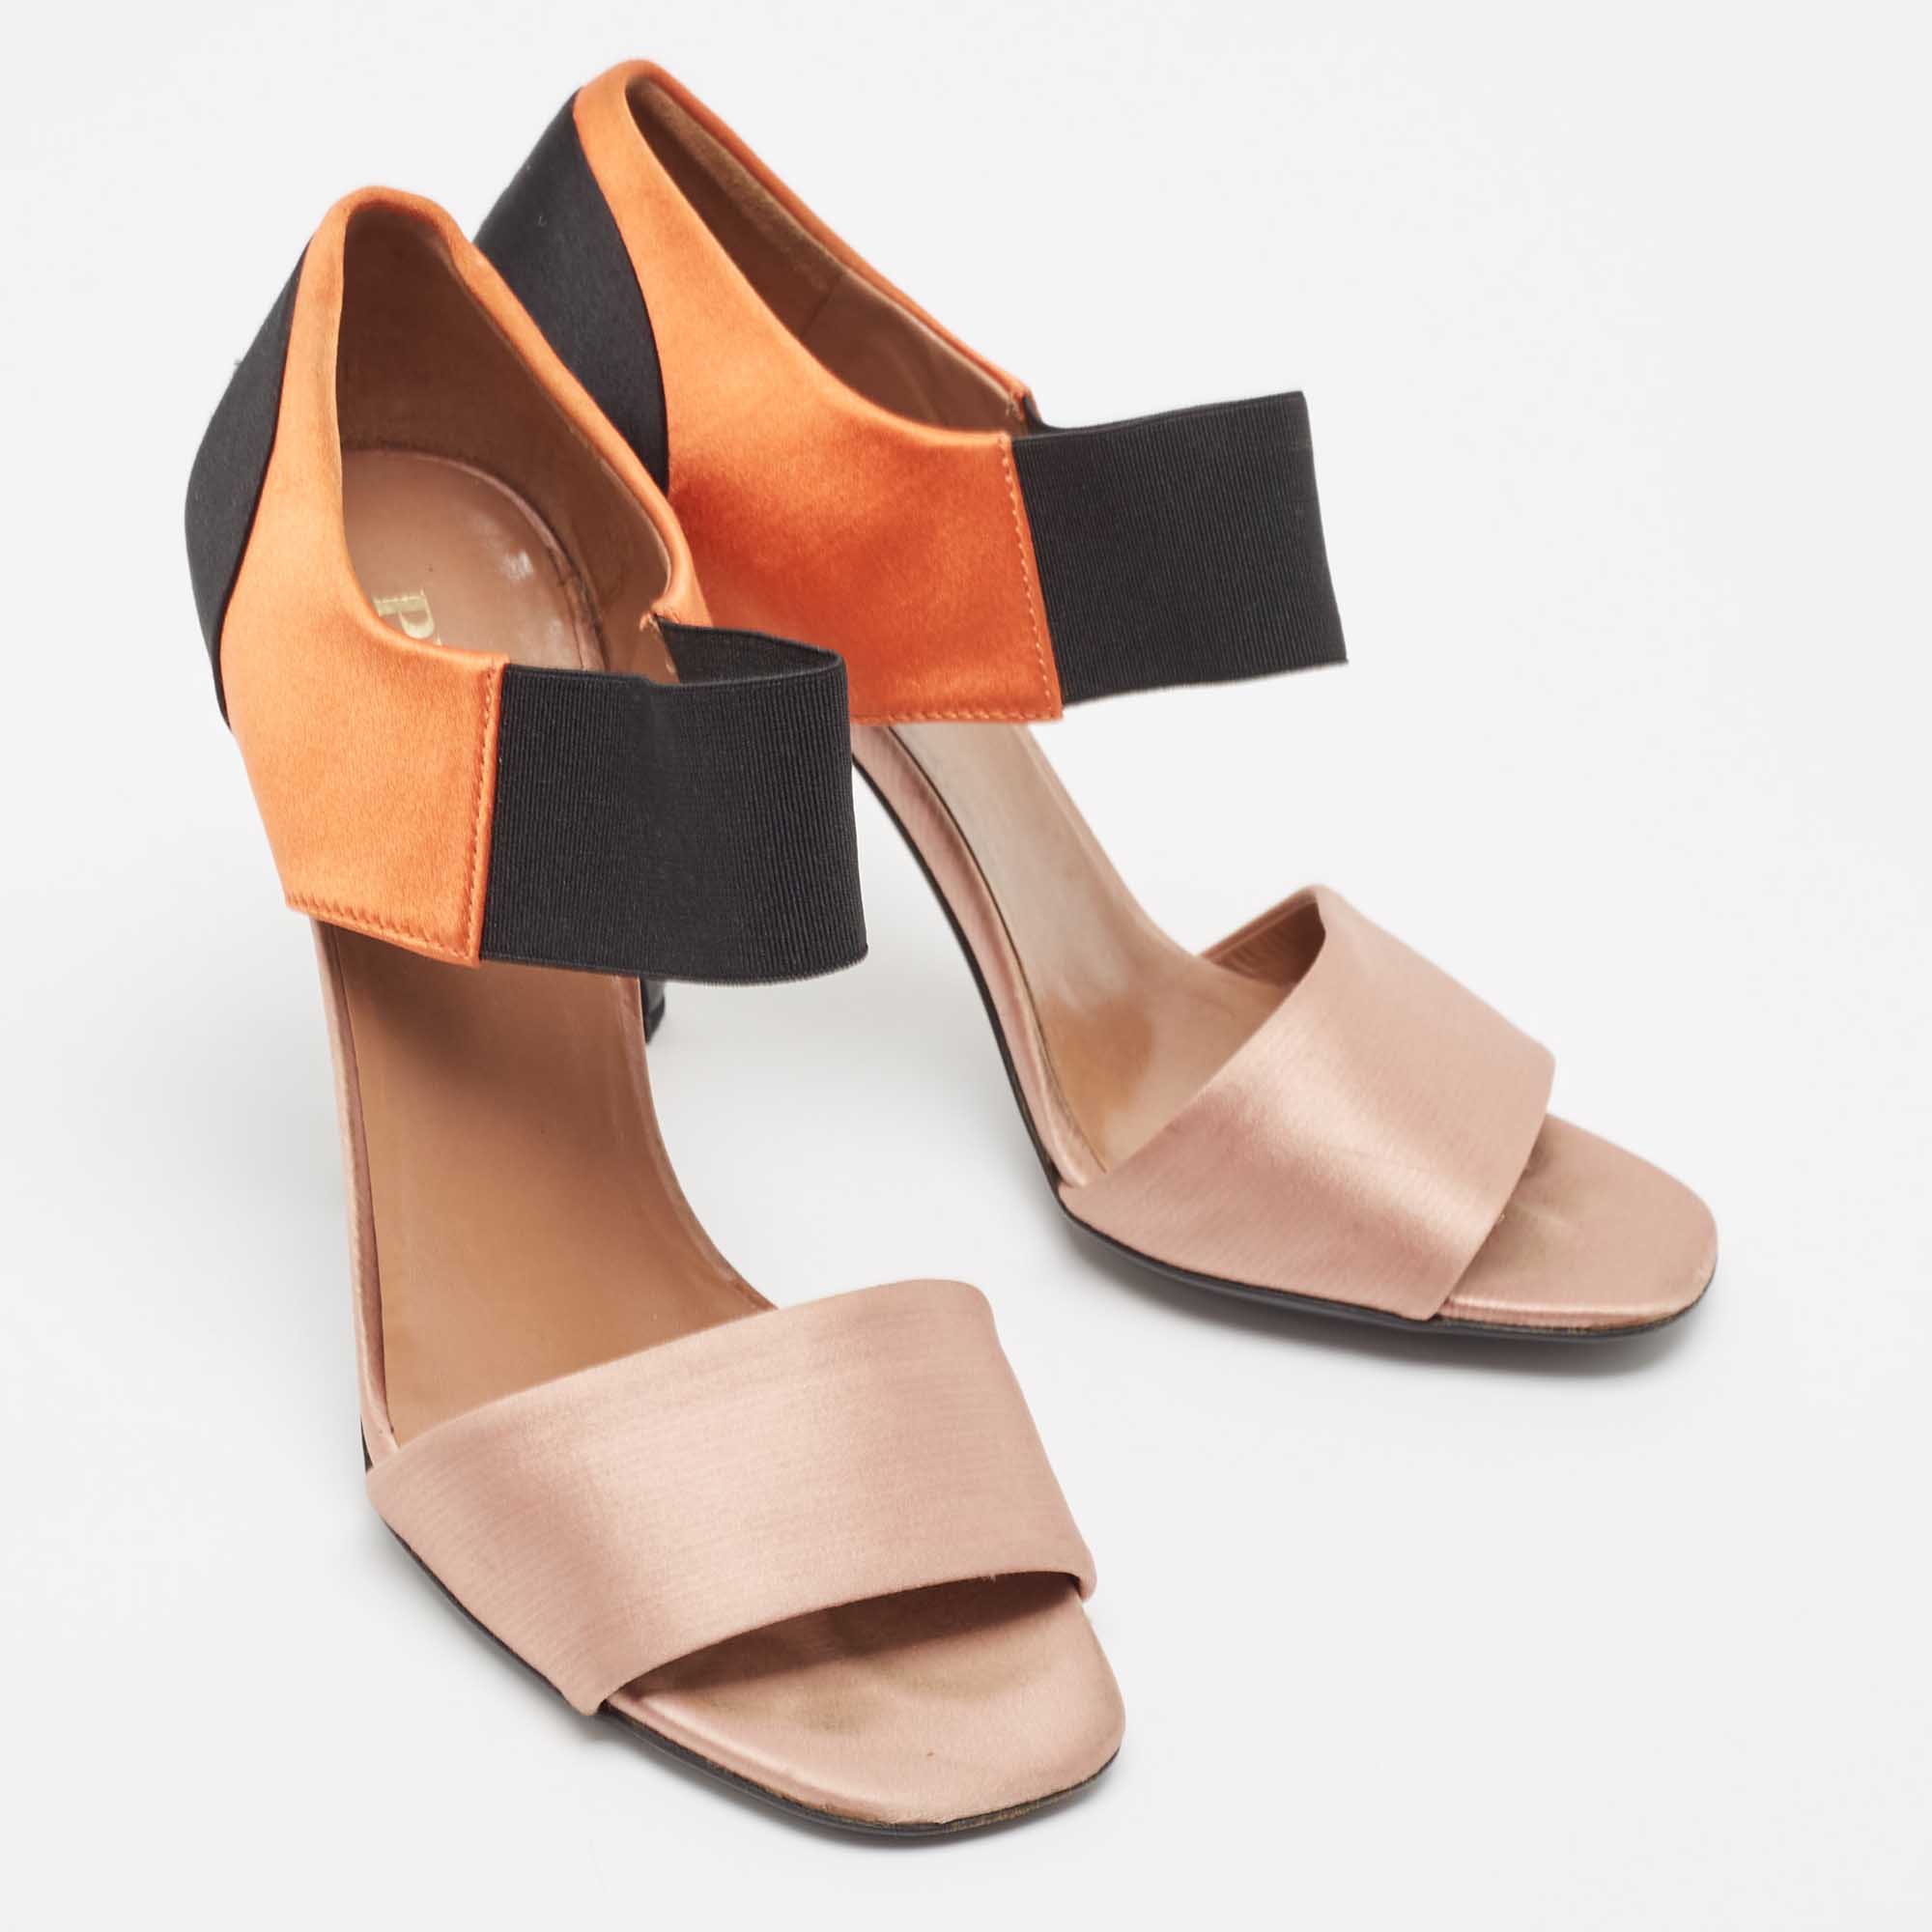 Prada Tricolor Satin Ankle Wrap Sandals Size 36